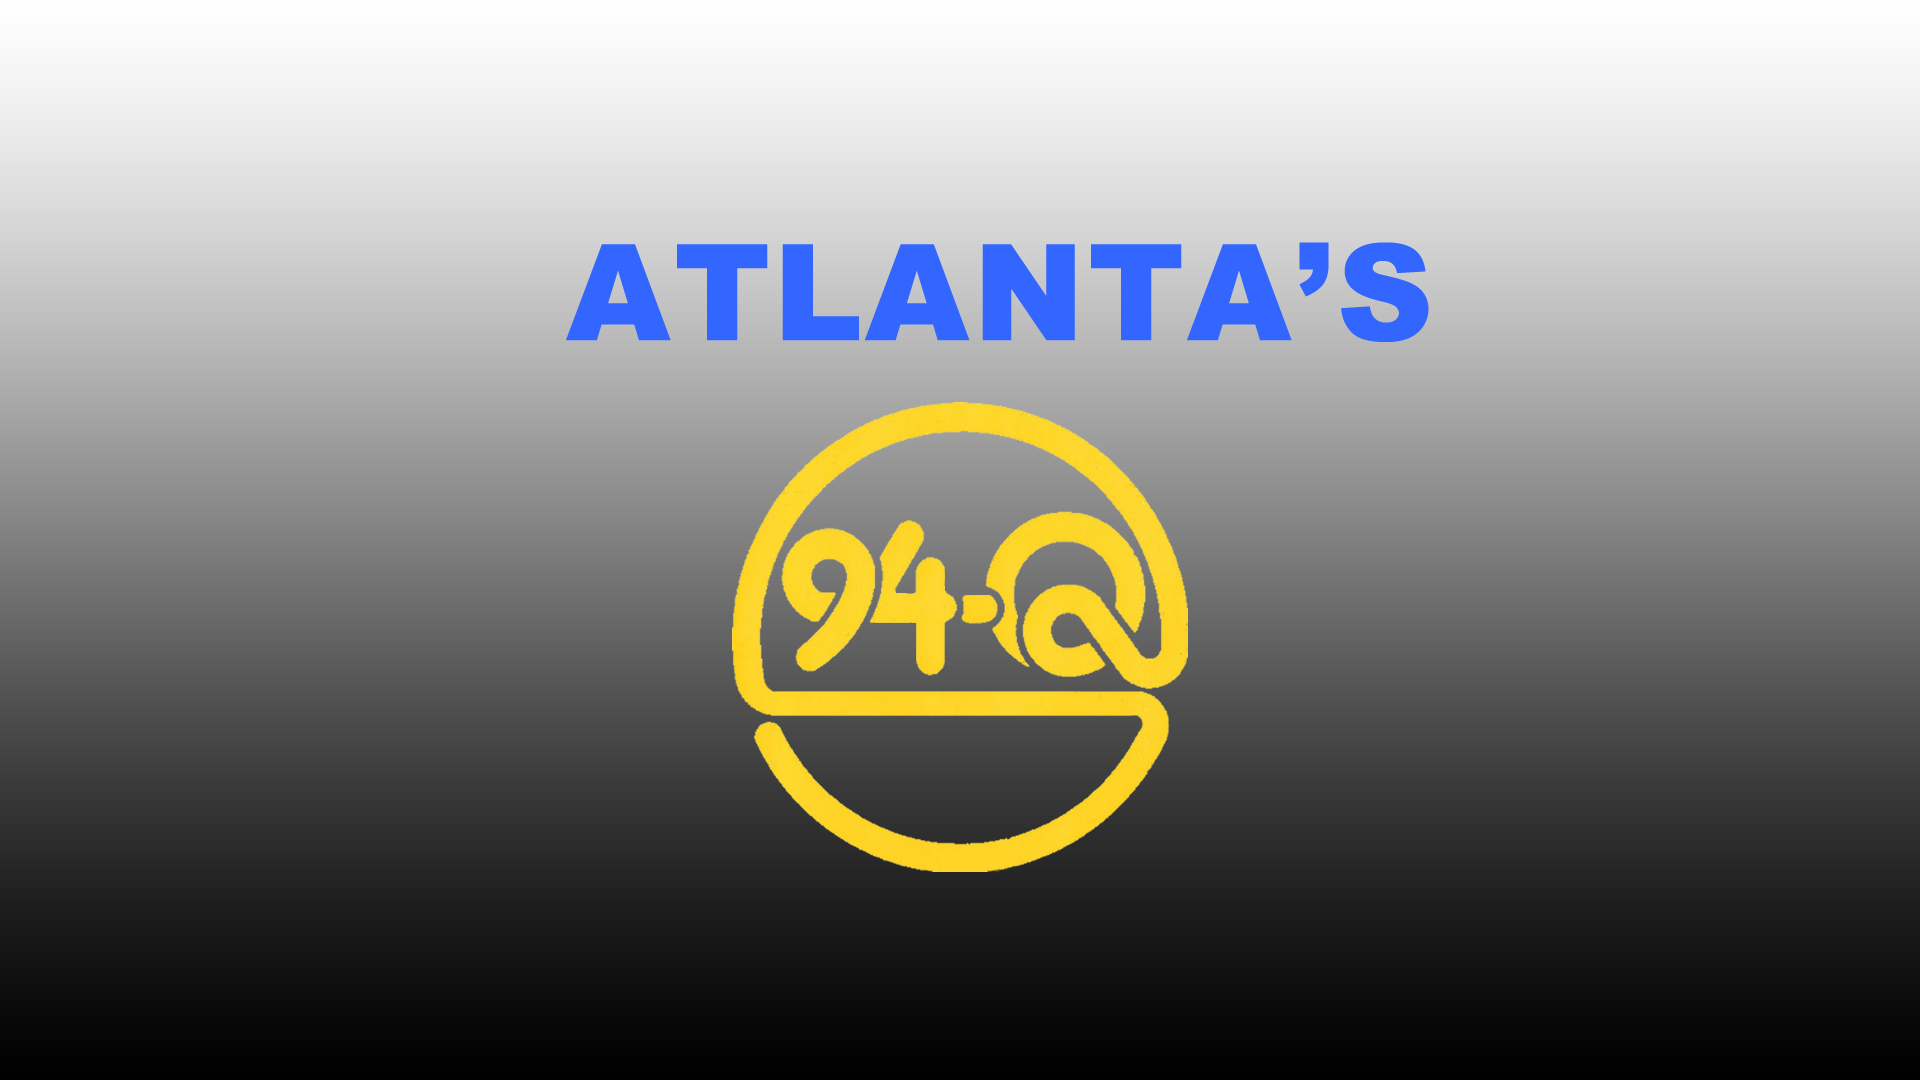 ATLANTA'S 94-Q